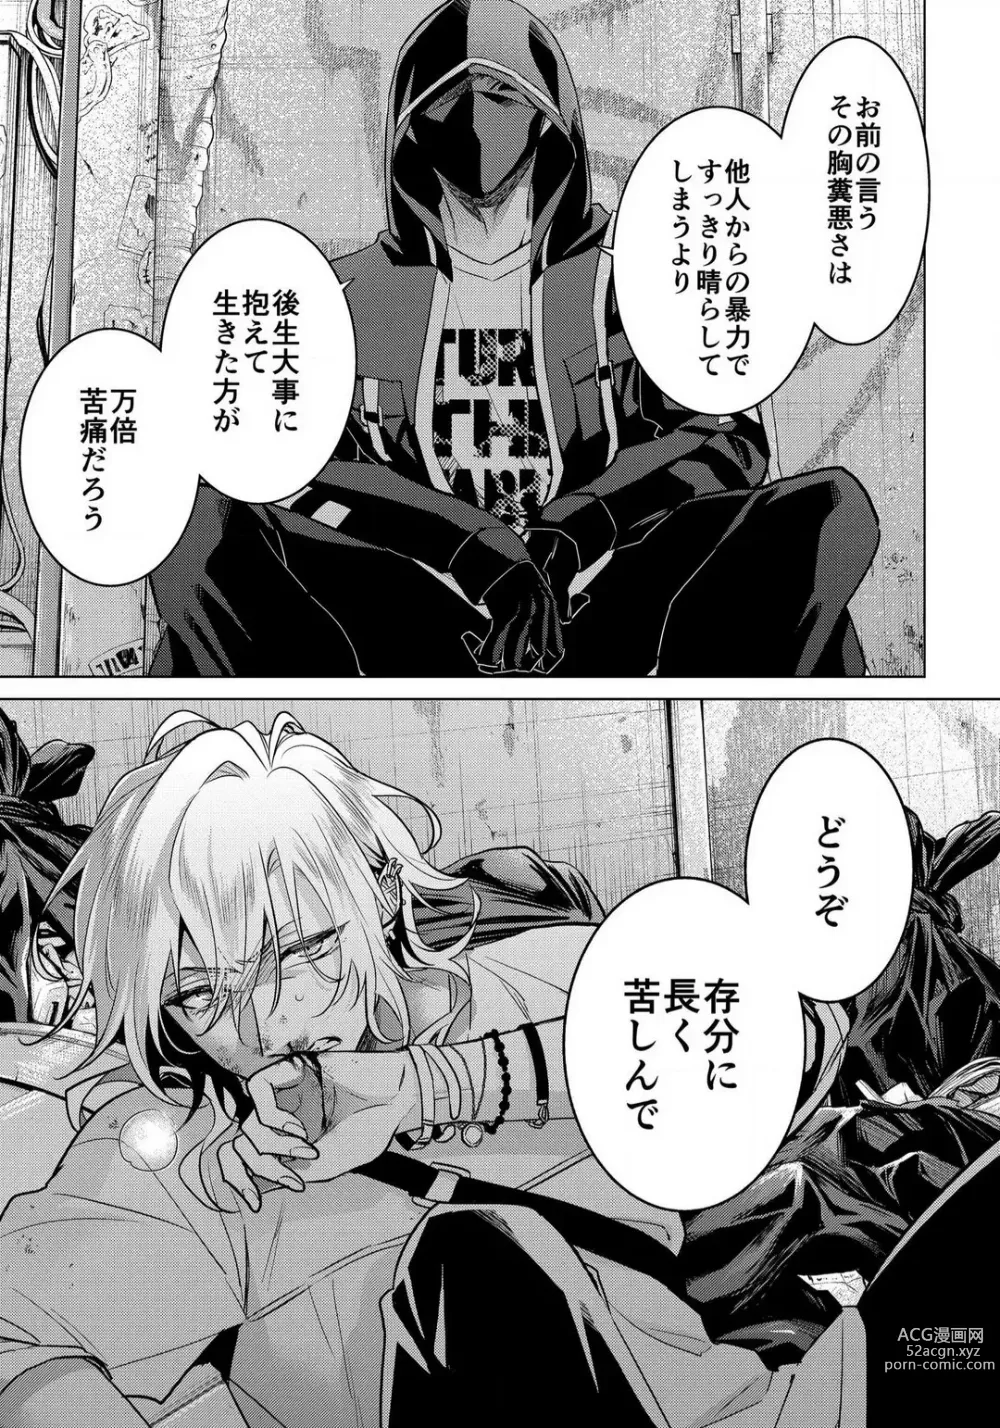 Page 846 of manga Ijimerare - Onna